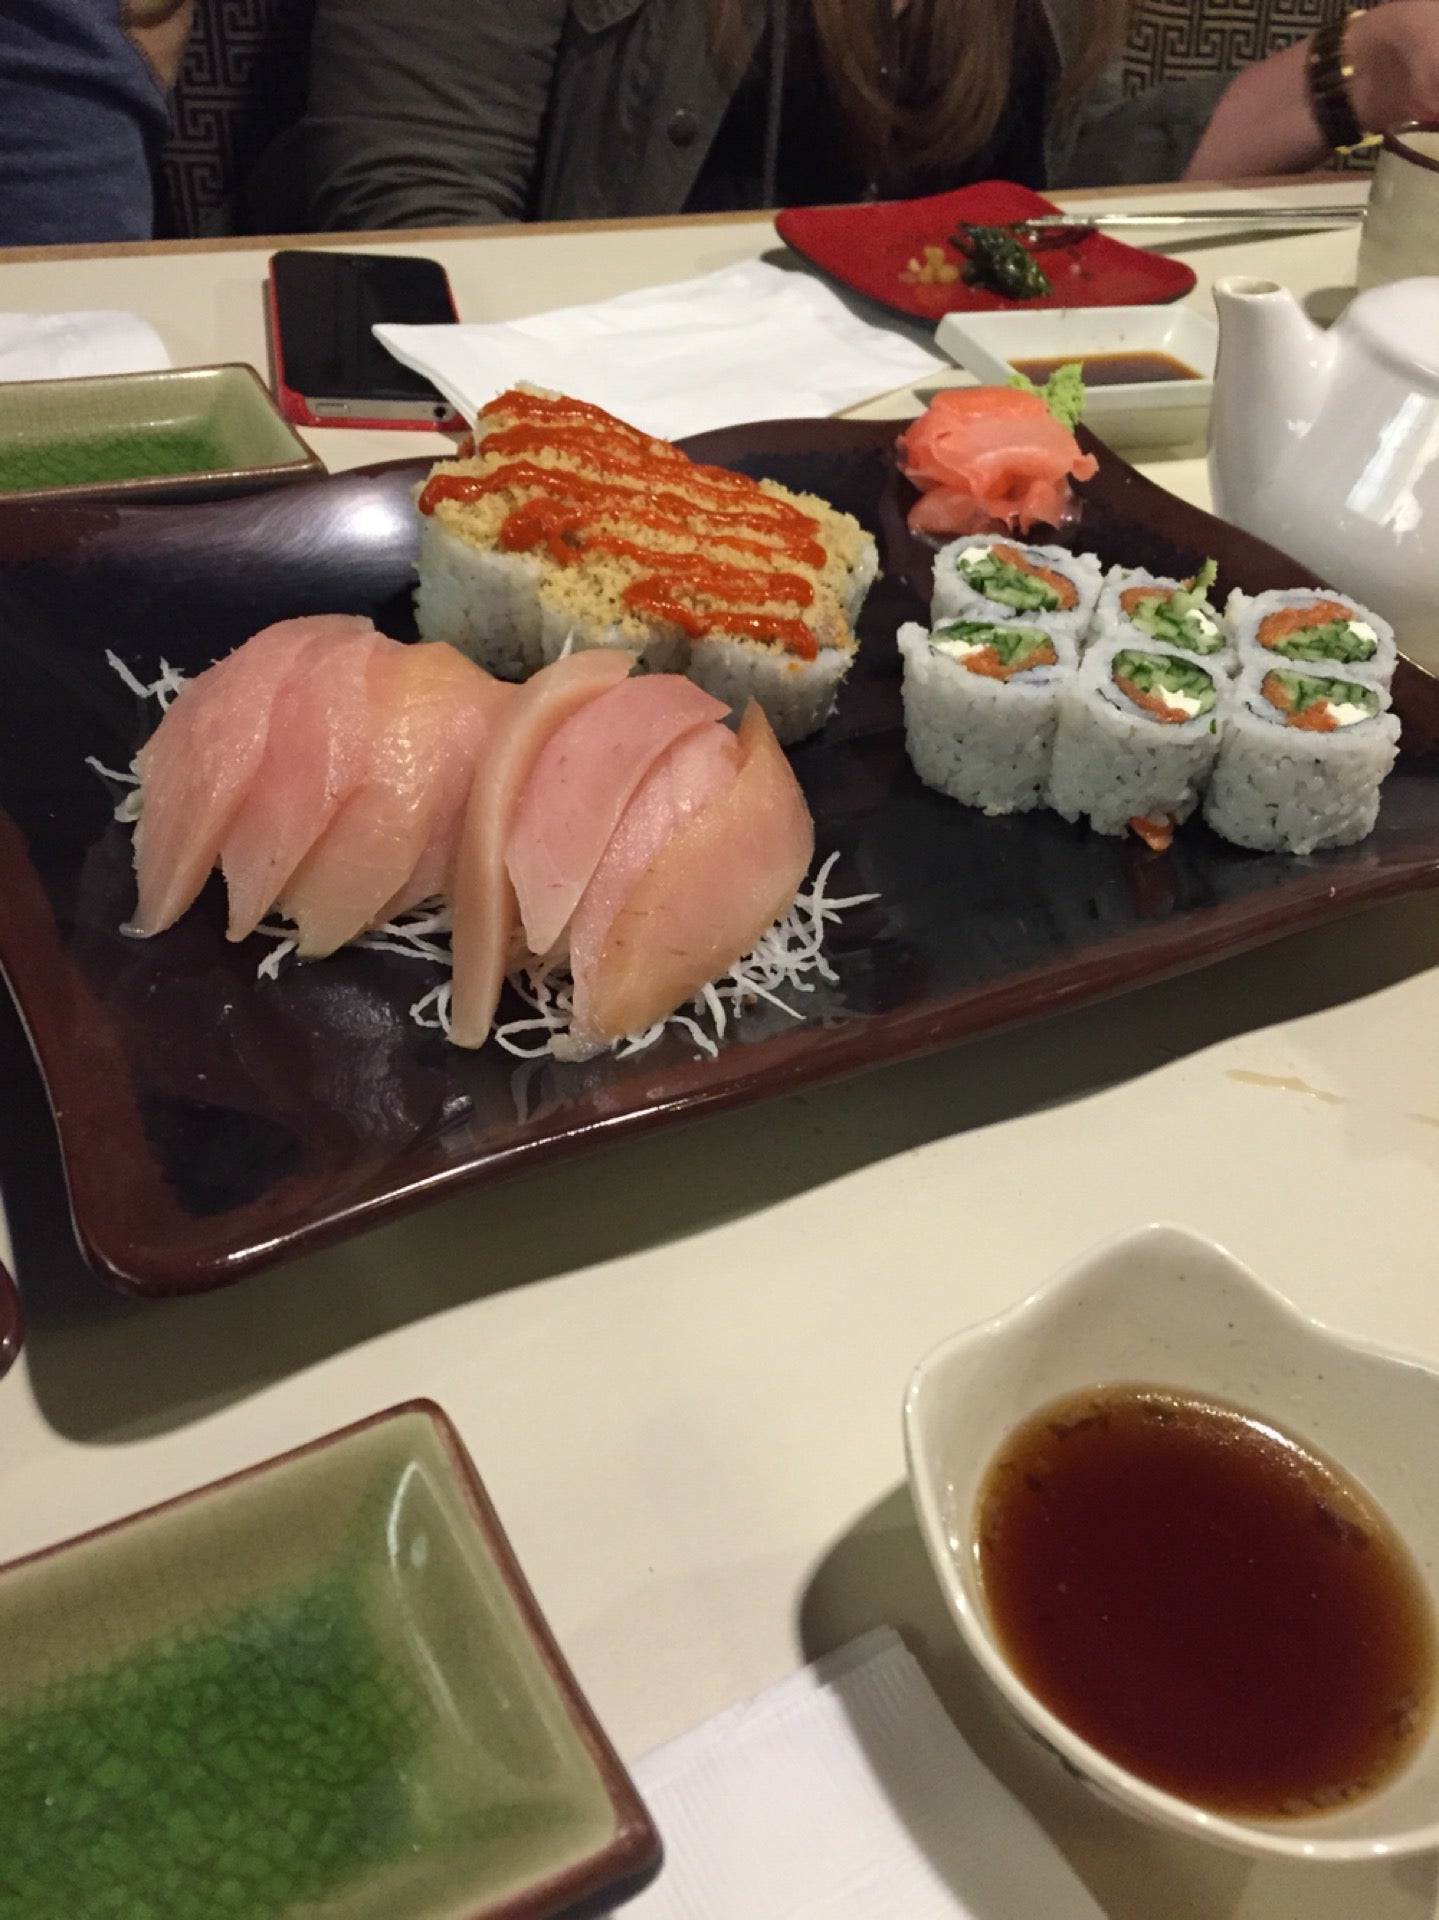 Sushi Cushi